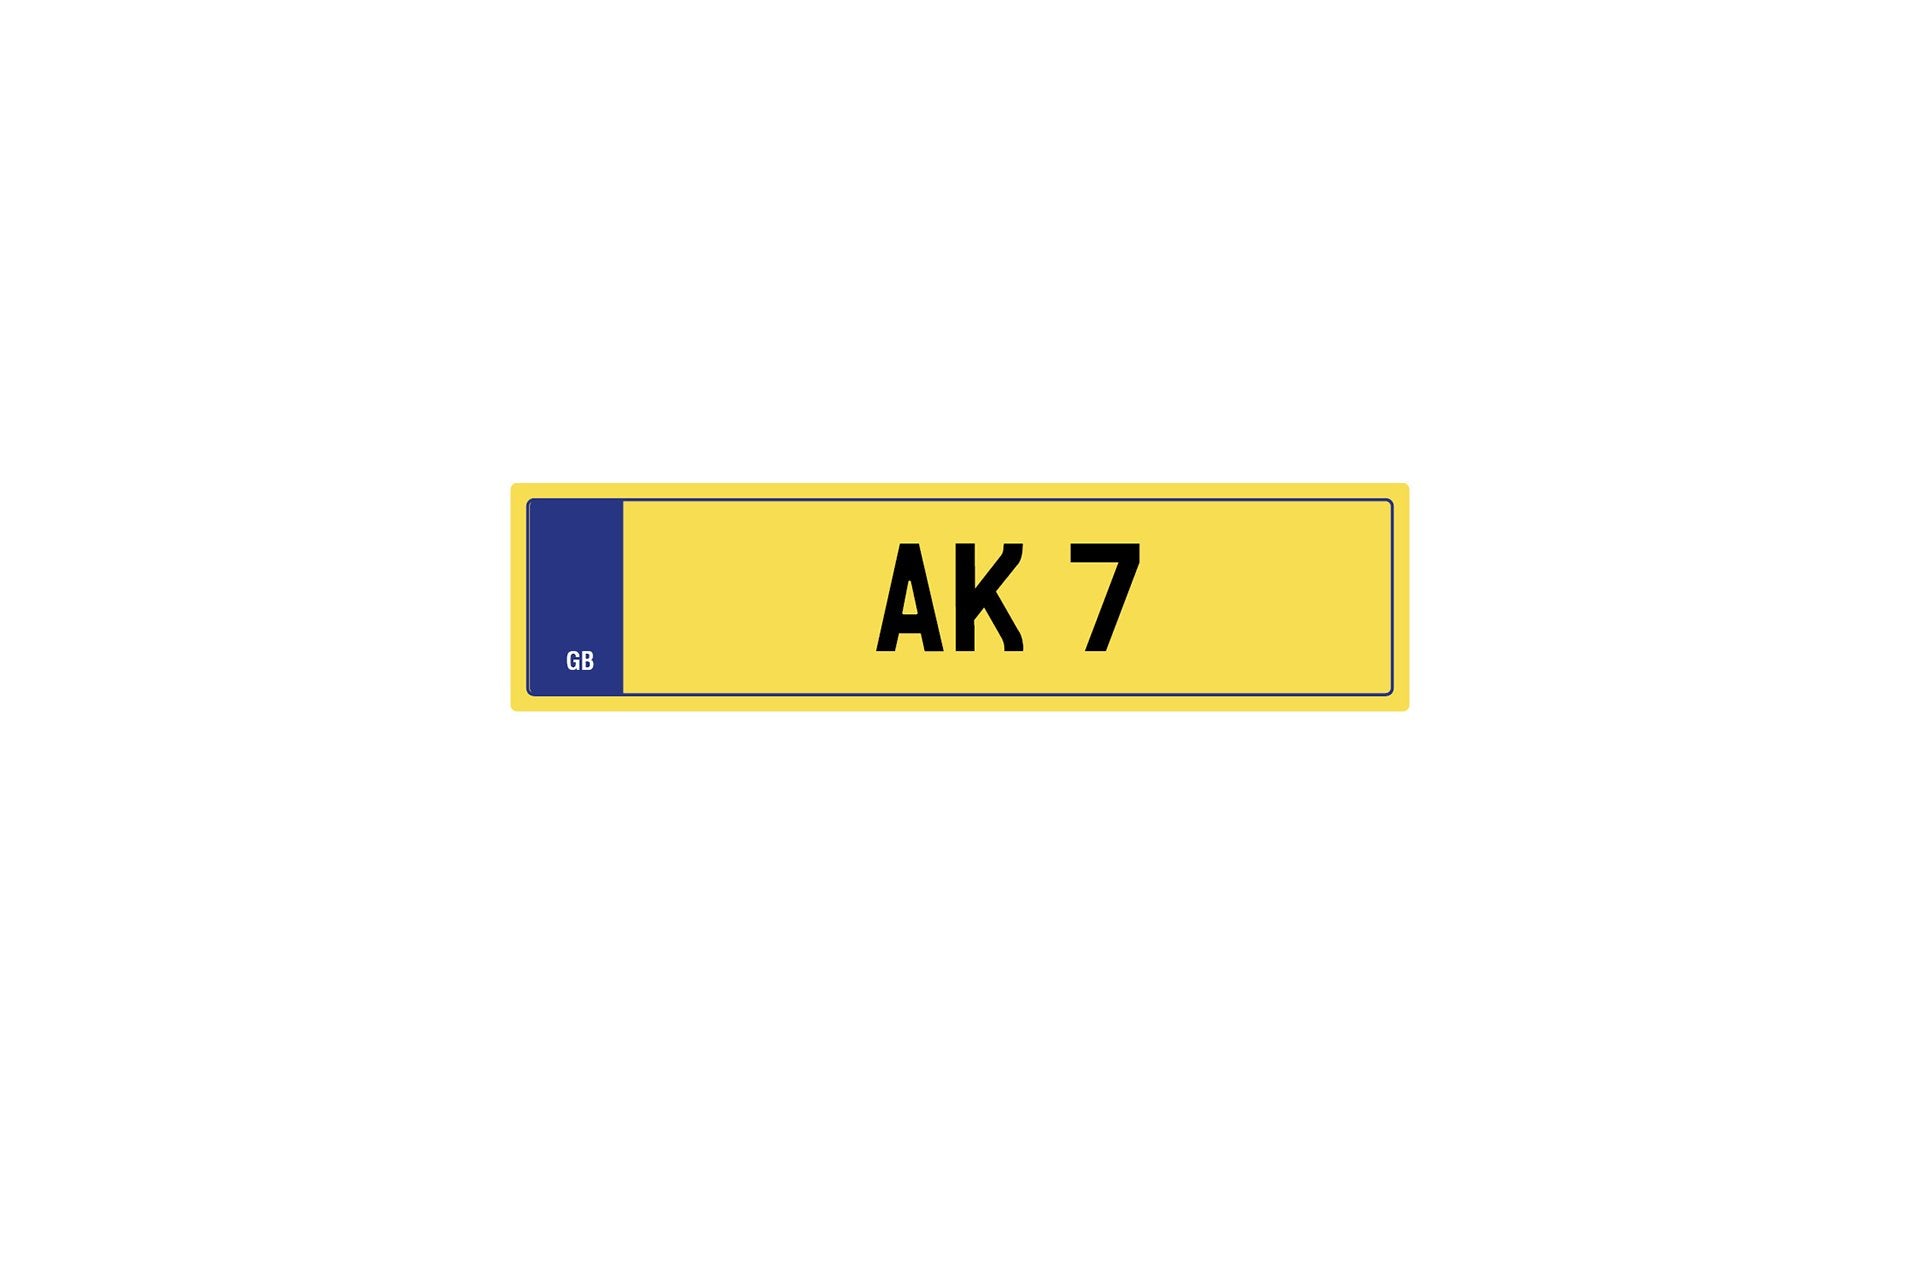 Private Plate Ak 7 by Kahn - Image 3755